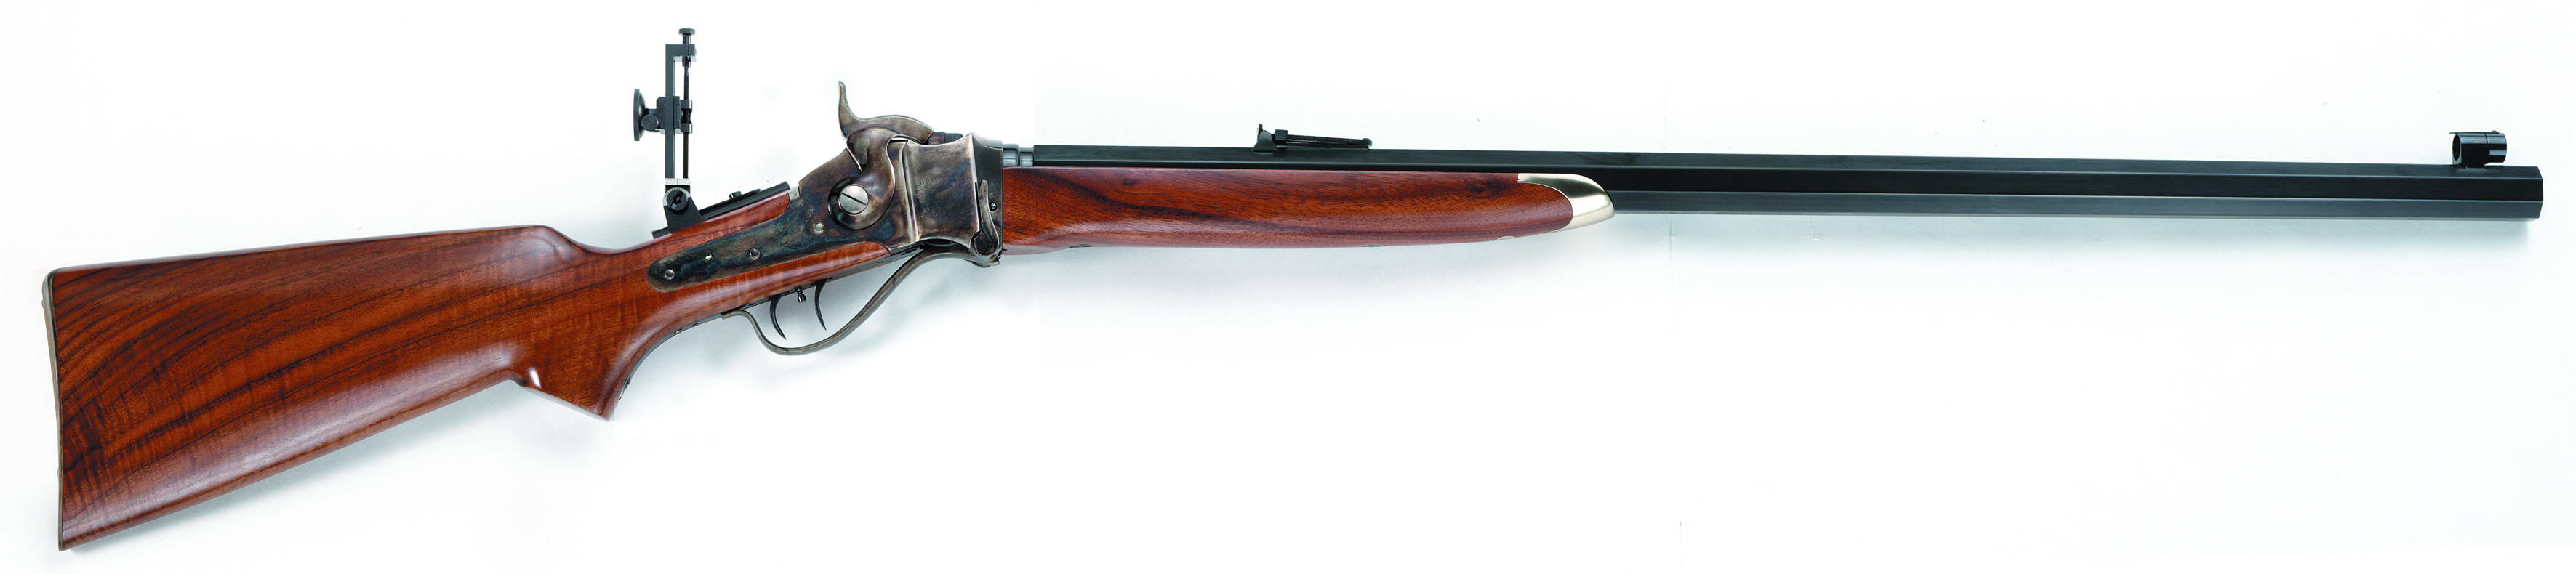 Sharps 1874 Rifle #26